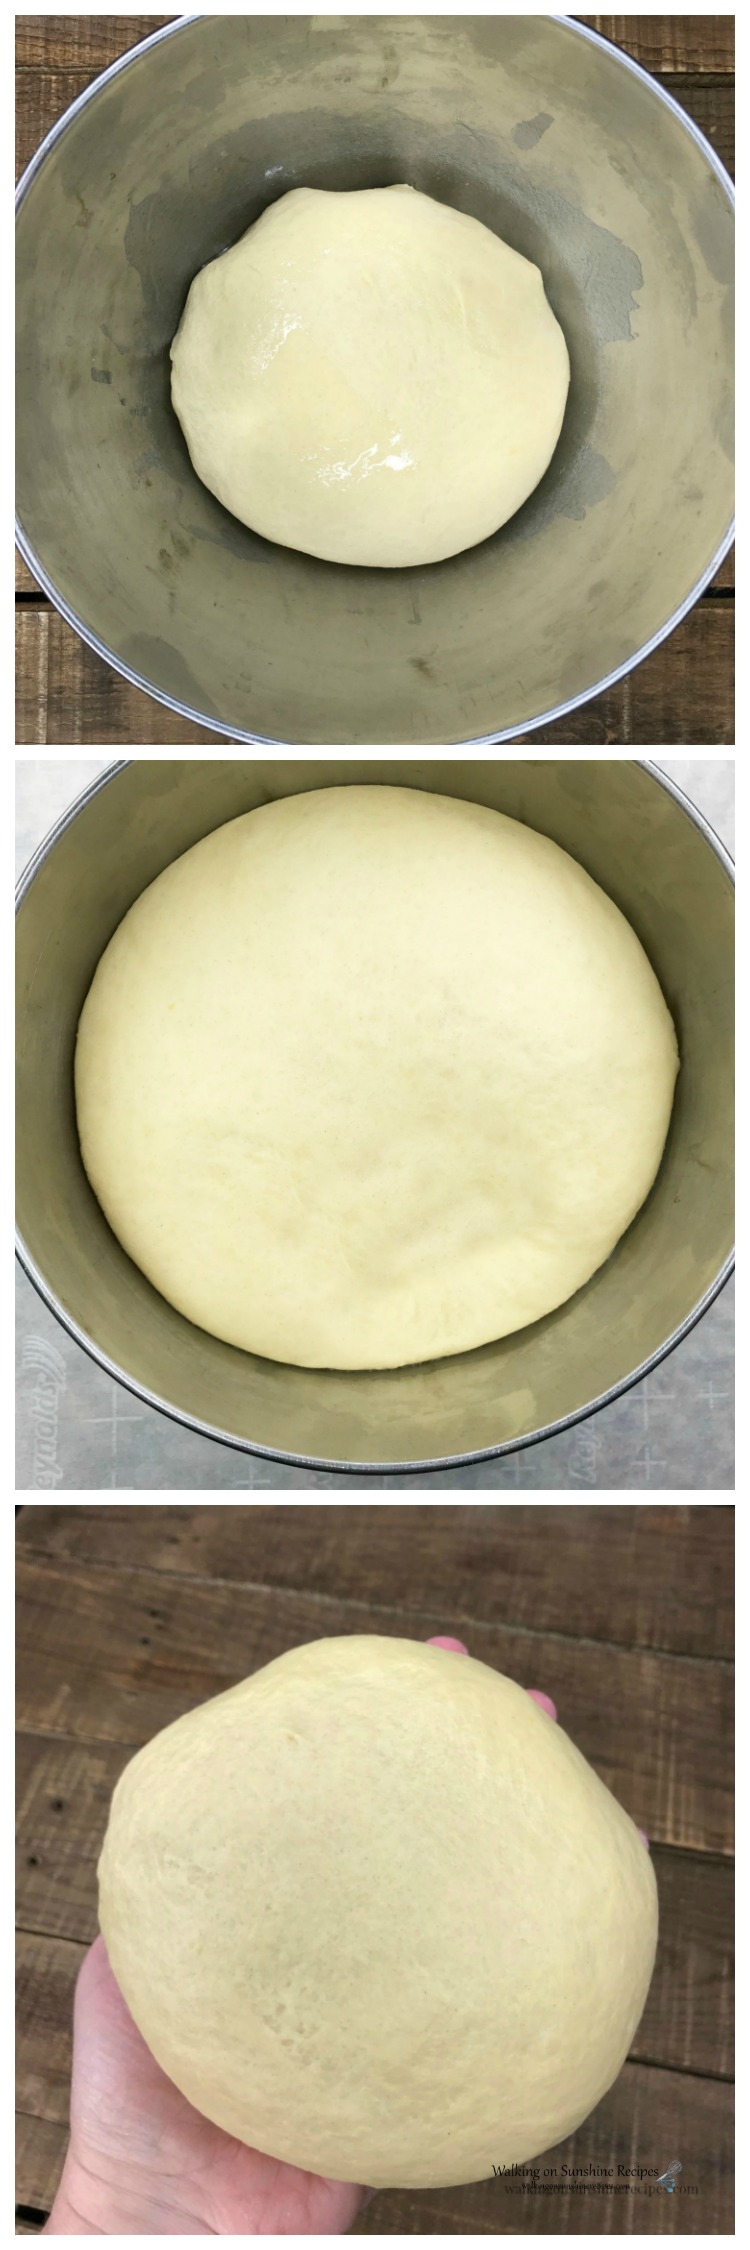 Homemade cinnamon rolls yeast dough rising in bowl